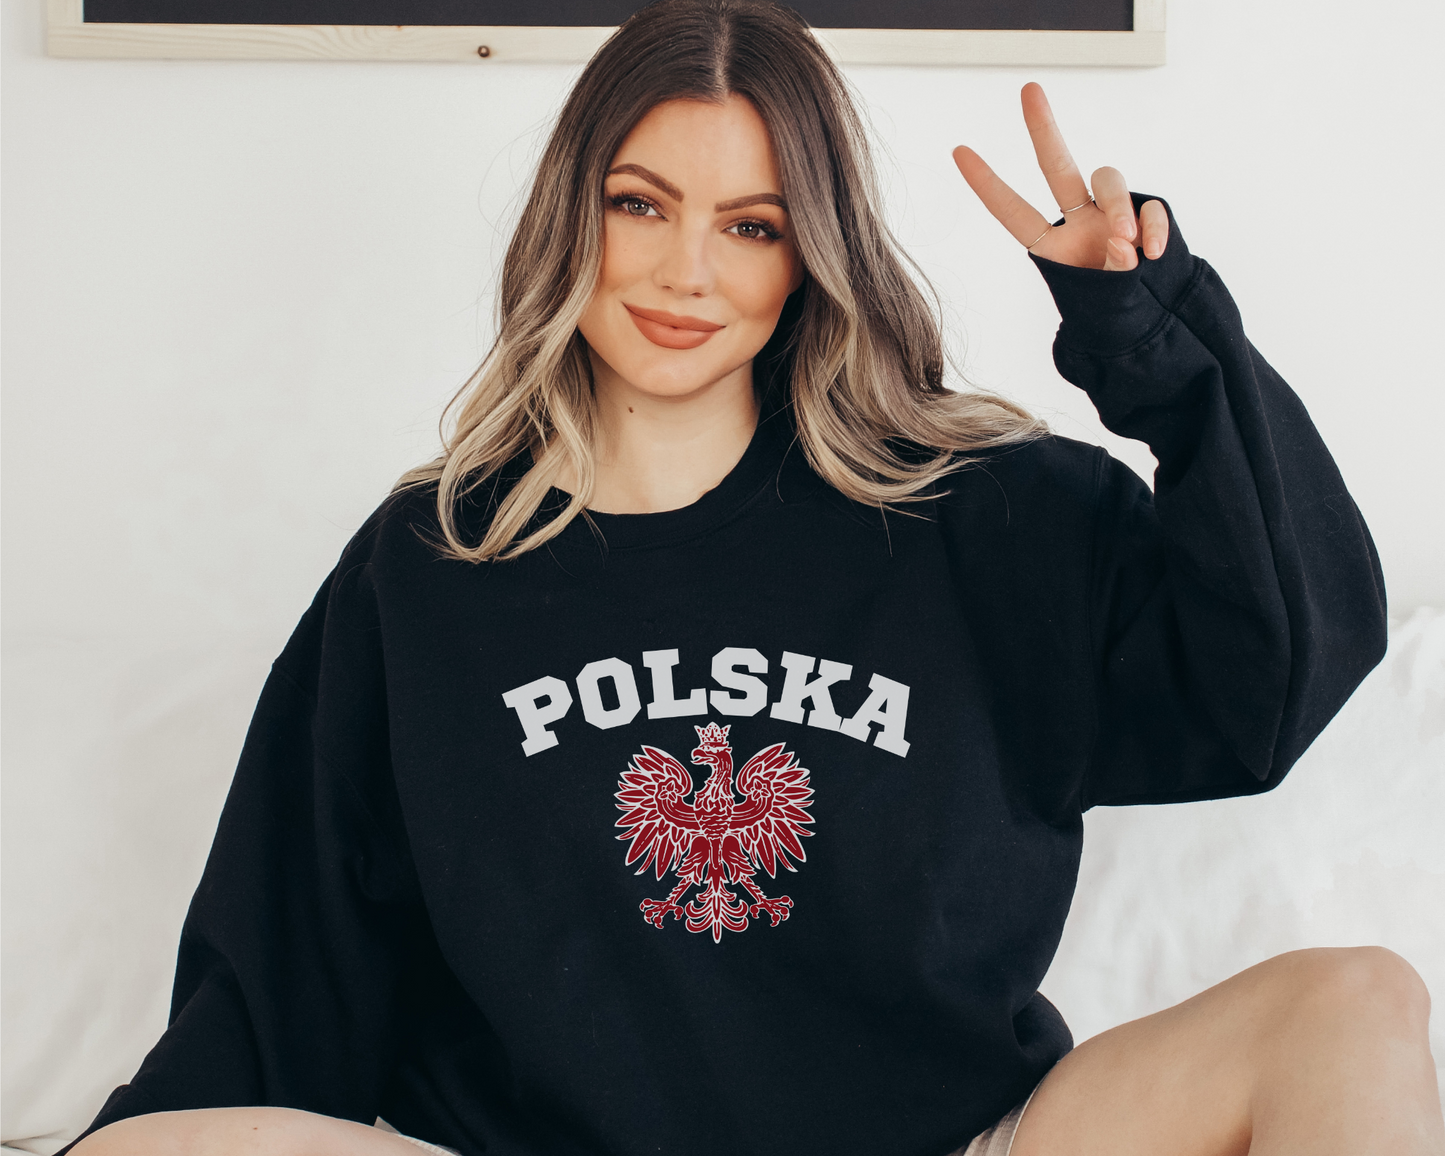 Polska Polish Sweatshirt in Black